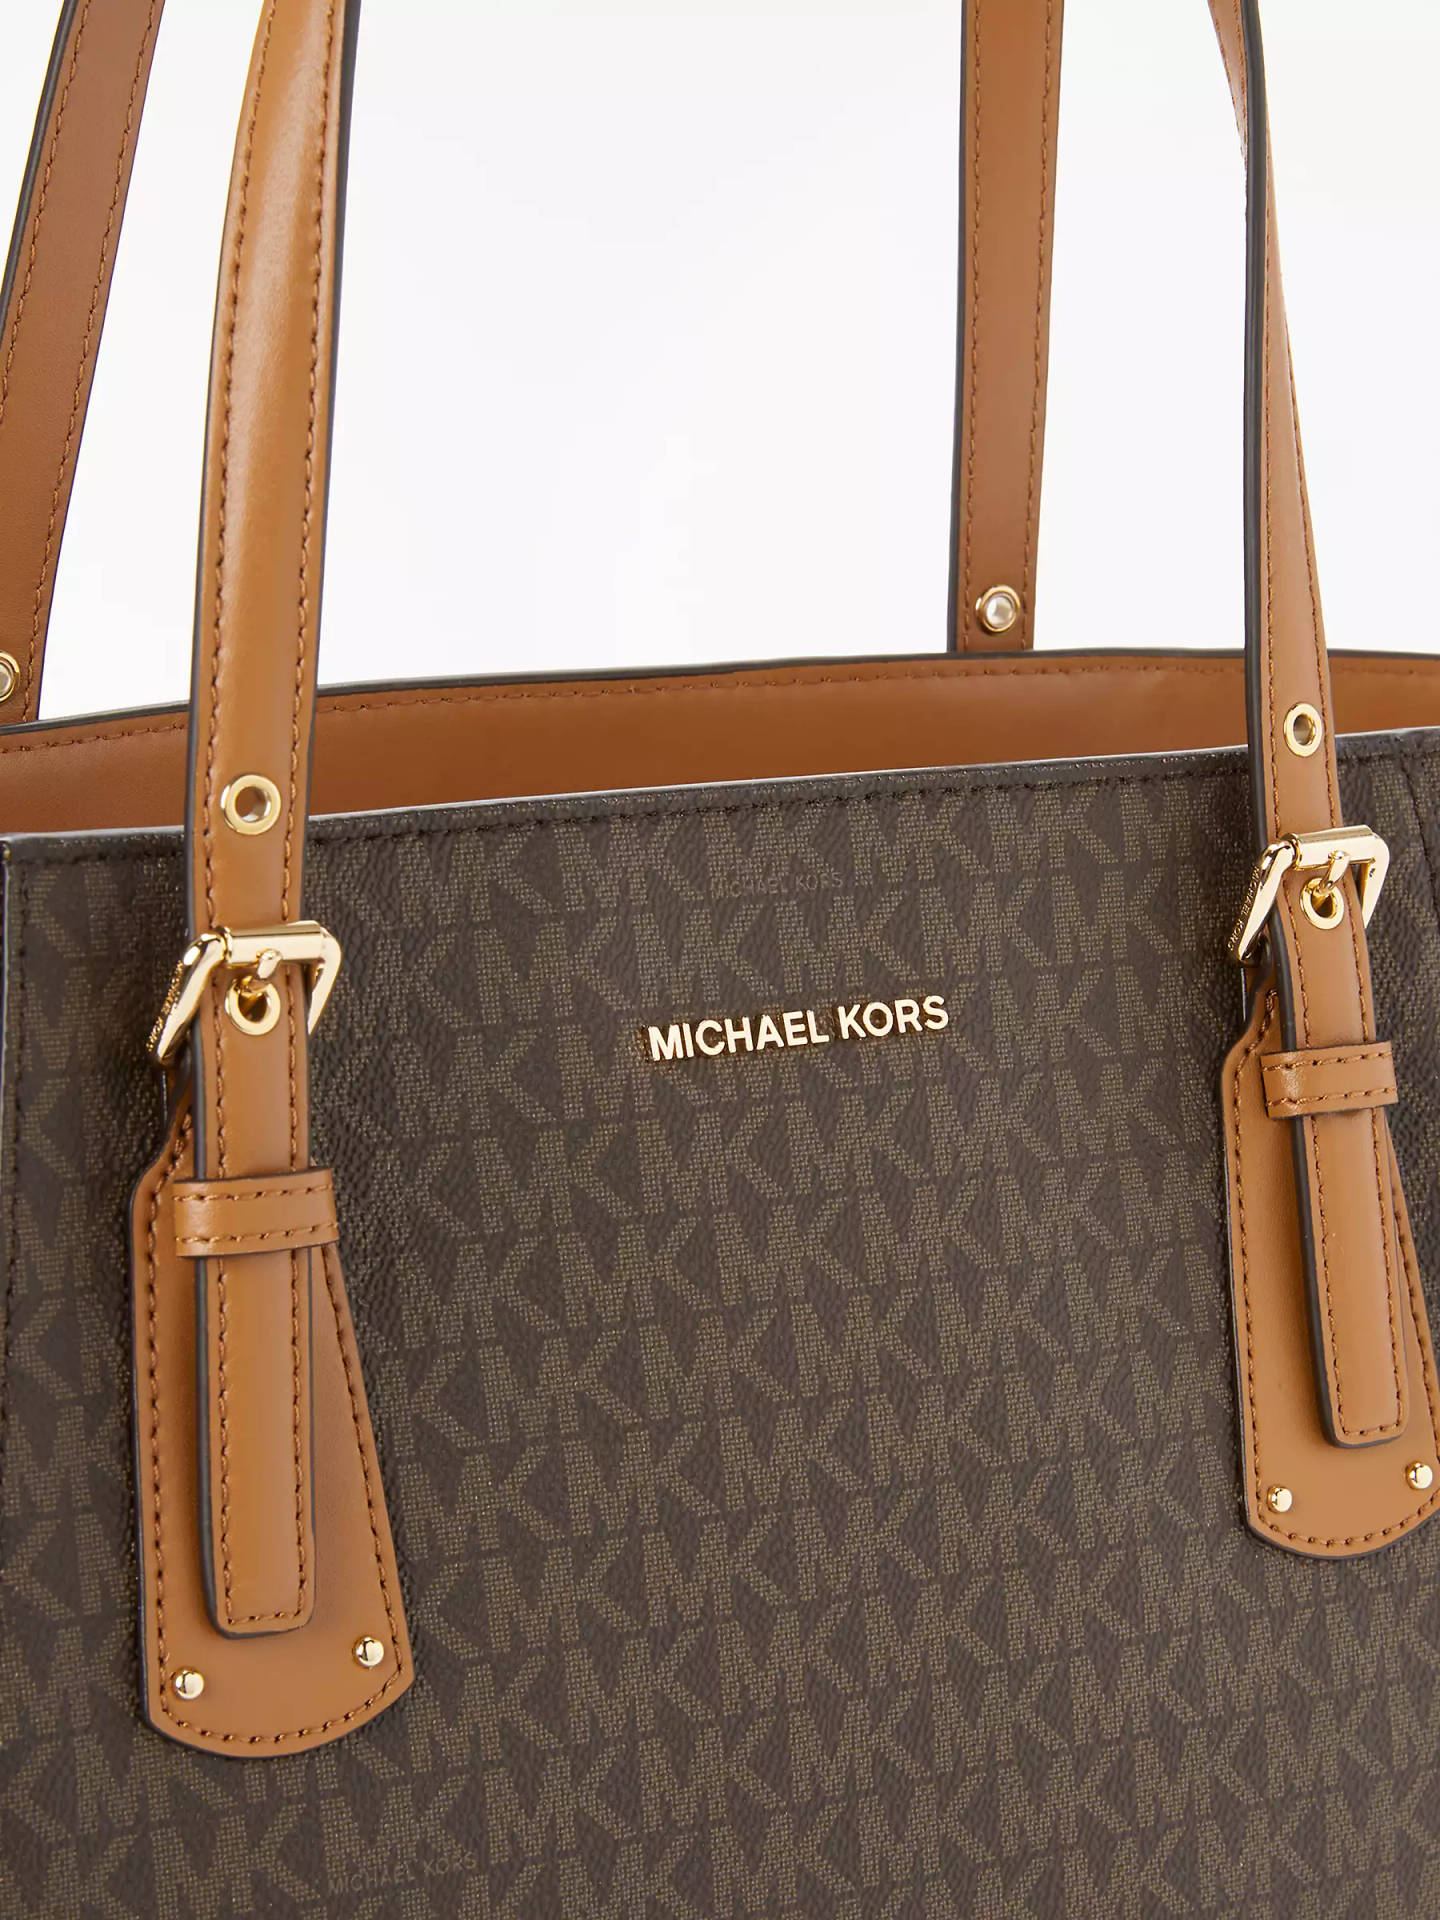 Michael Kors Classic Bag Design